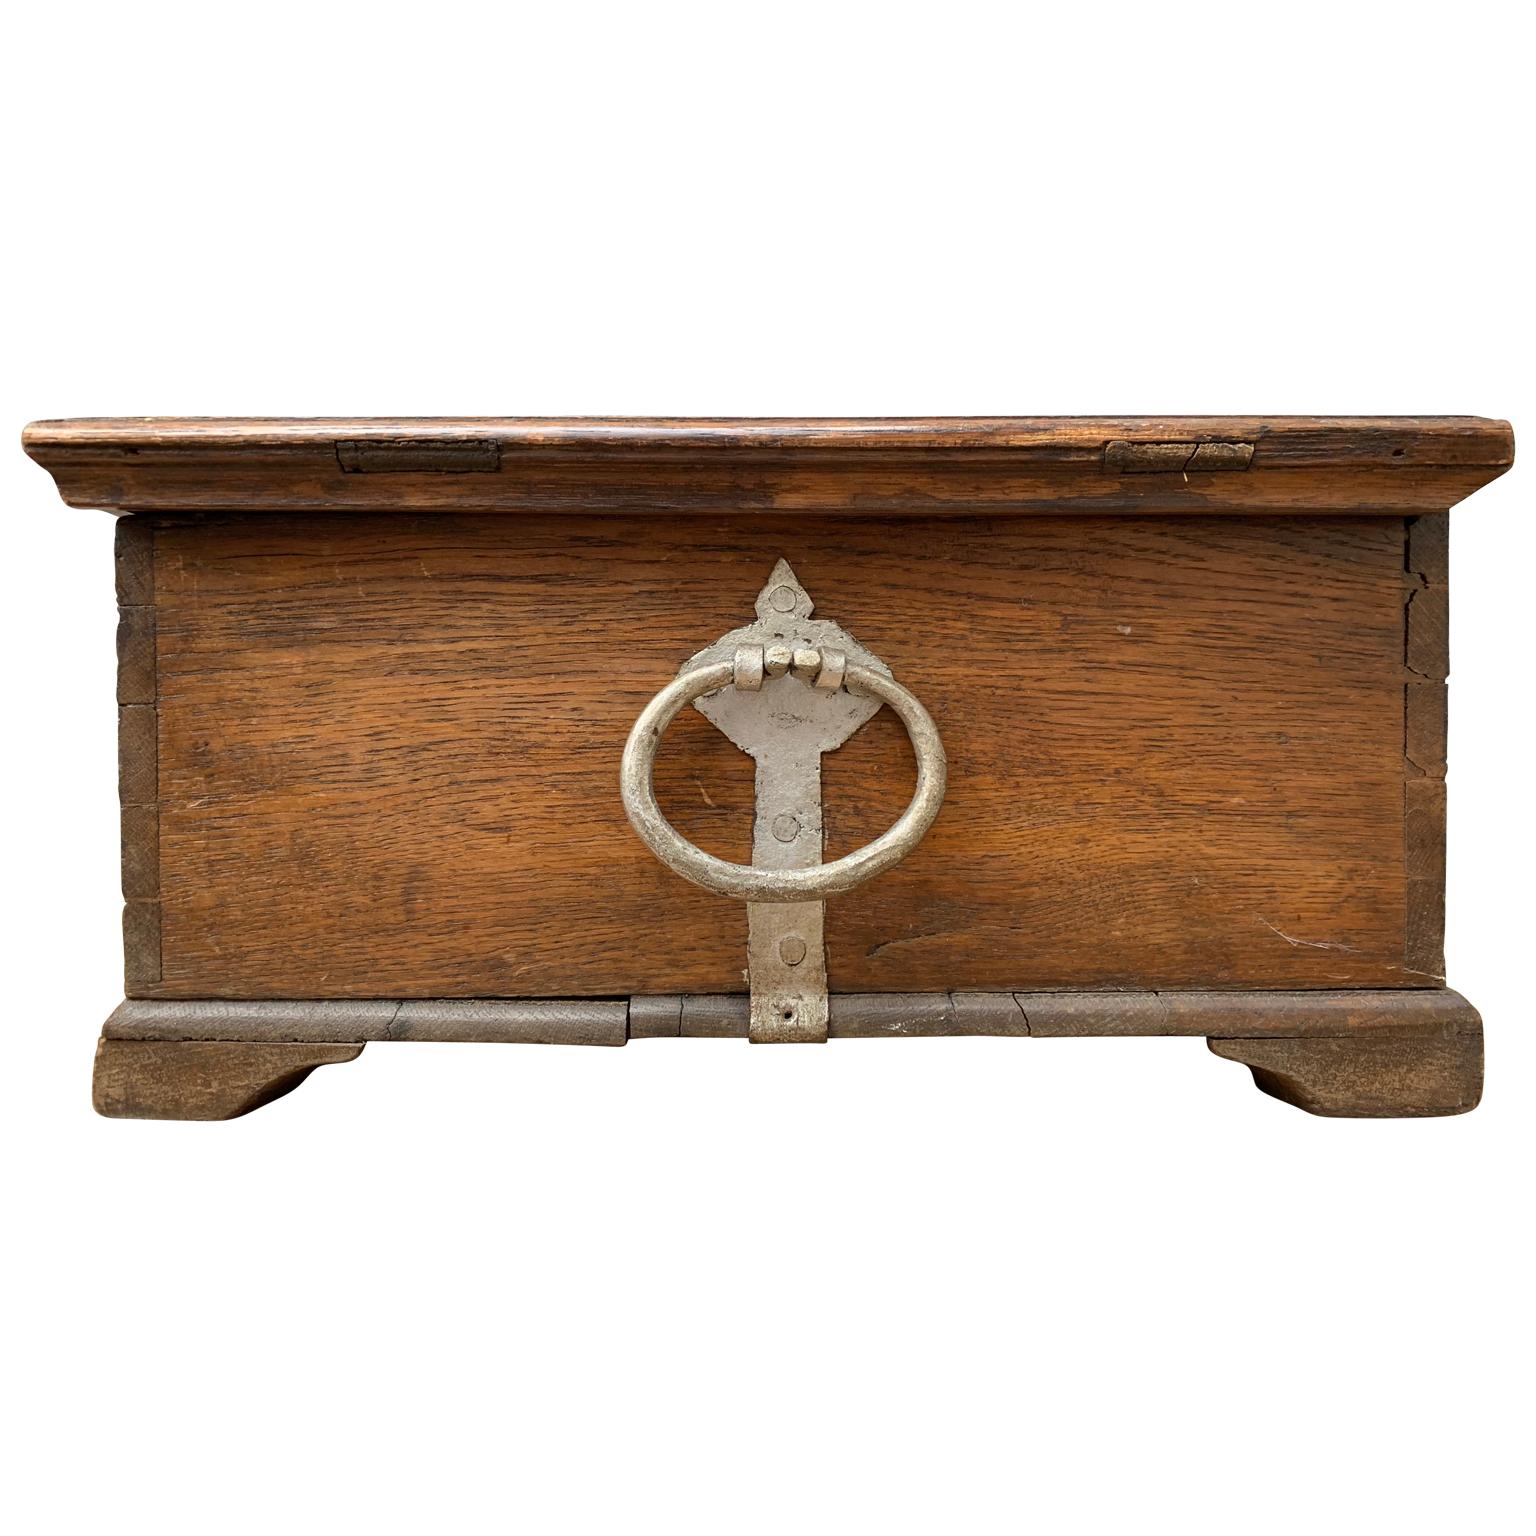 Hammered Swedish Folk Art Oak Box, Dated 1783